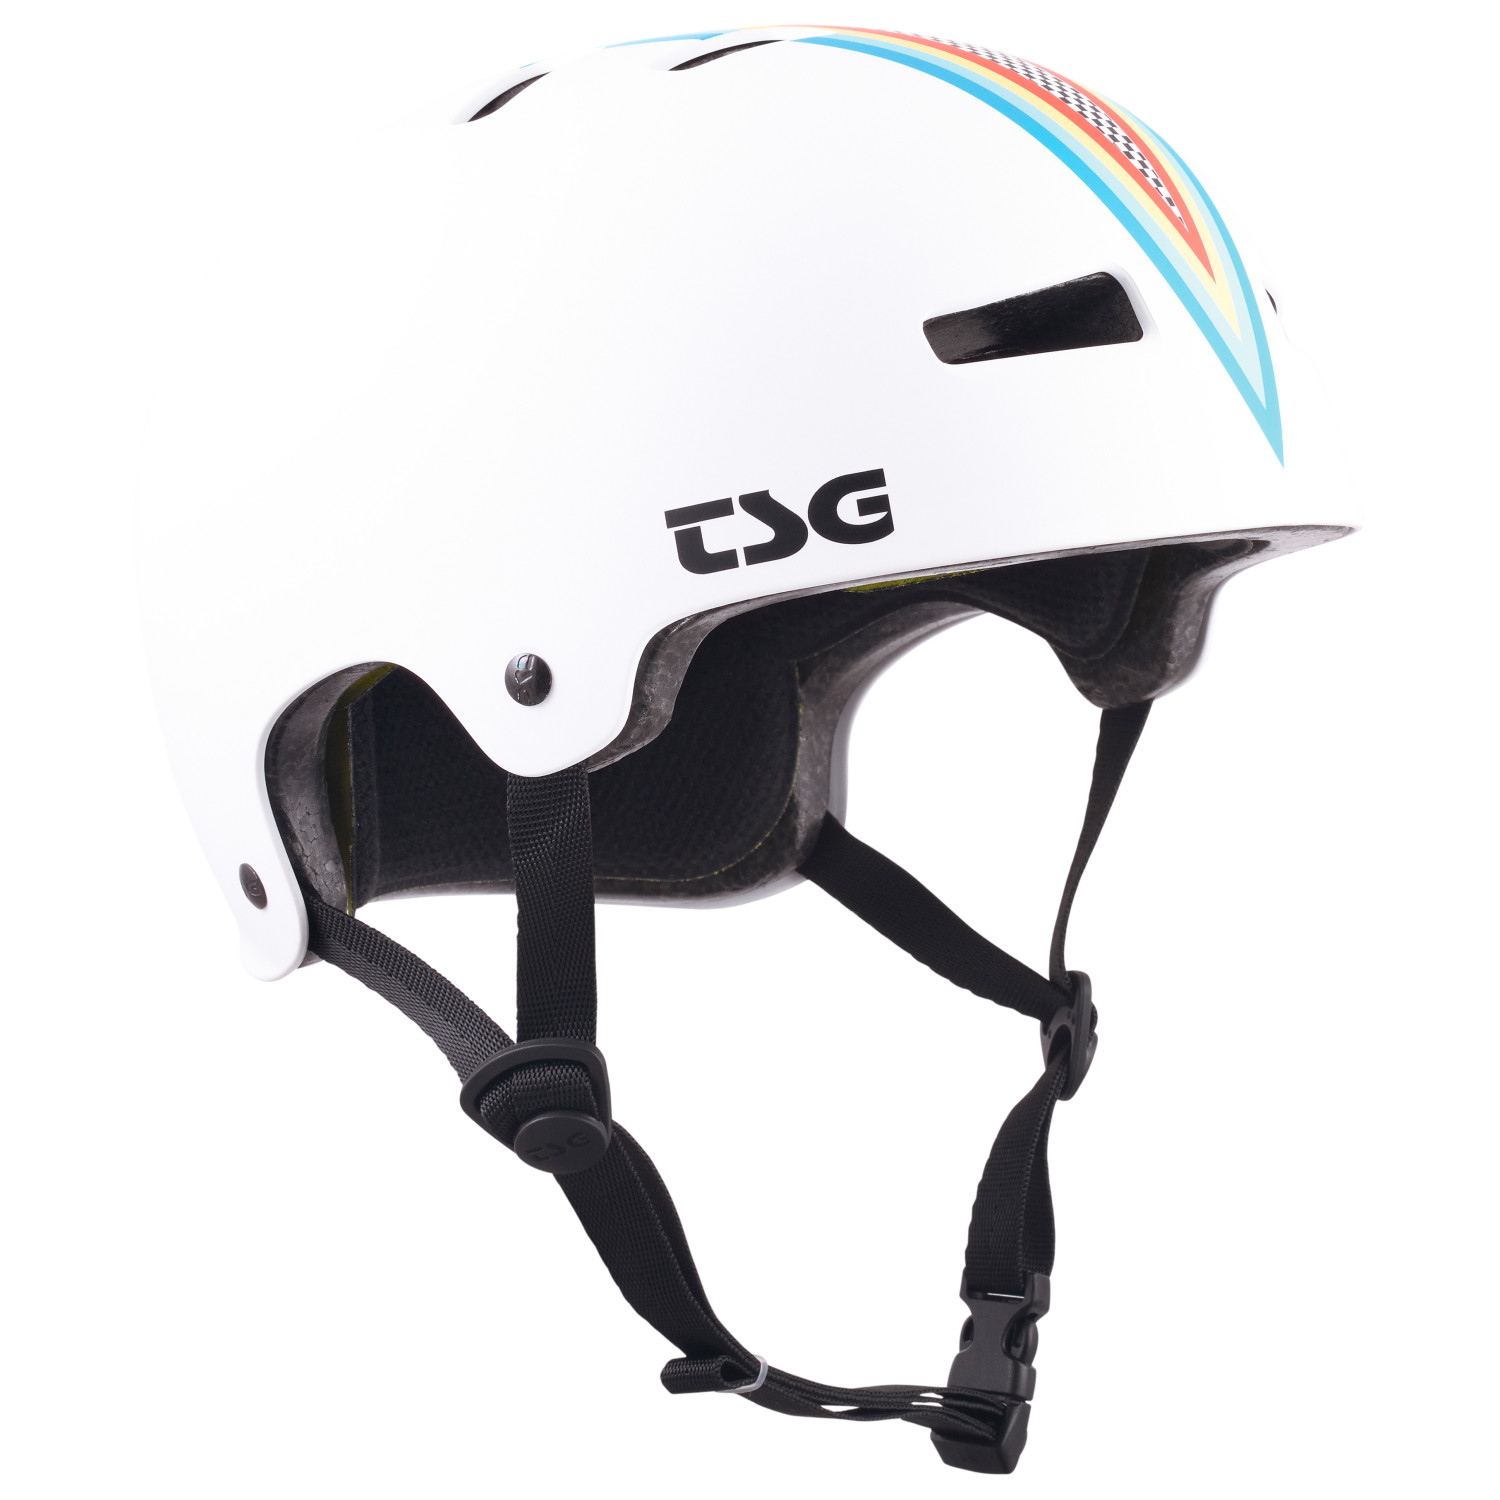 Велосипедный шлем Tsg Evolution Graphic Design, цвет Pintail